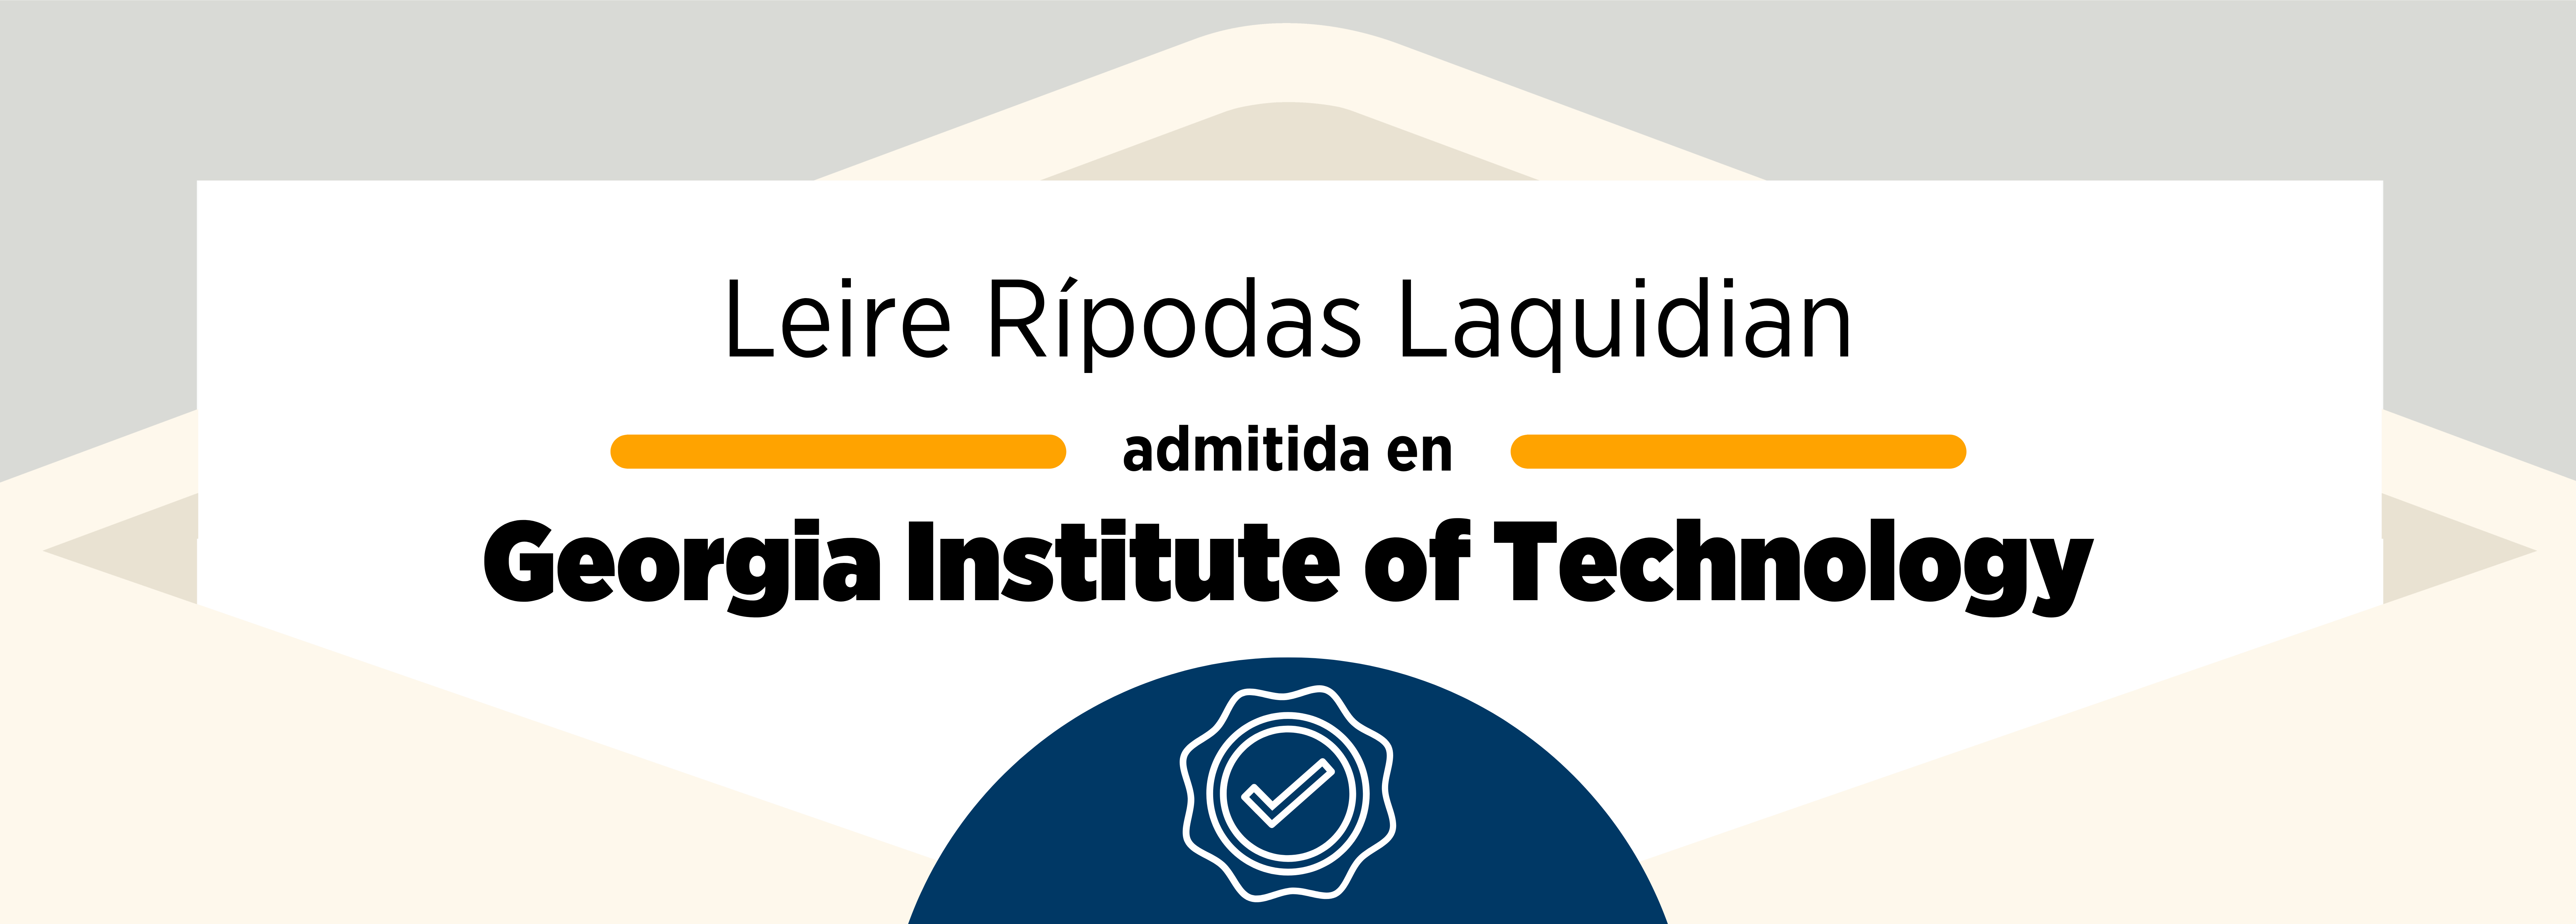 Admissions 2021: Leire Rípodas Laquidain & Georgia Institute of Technology